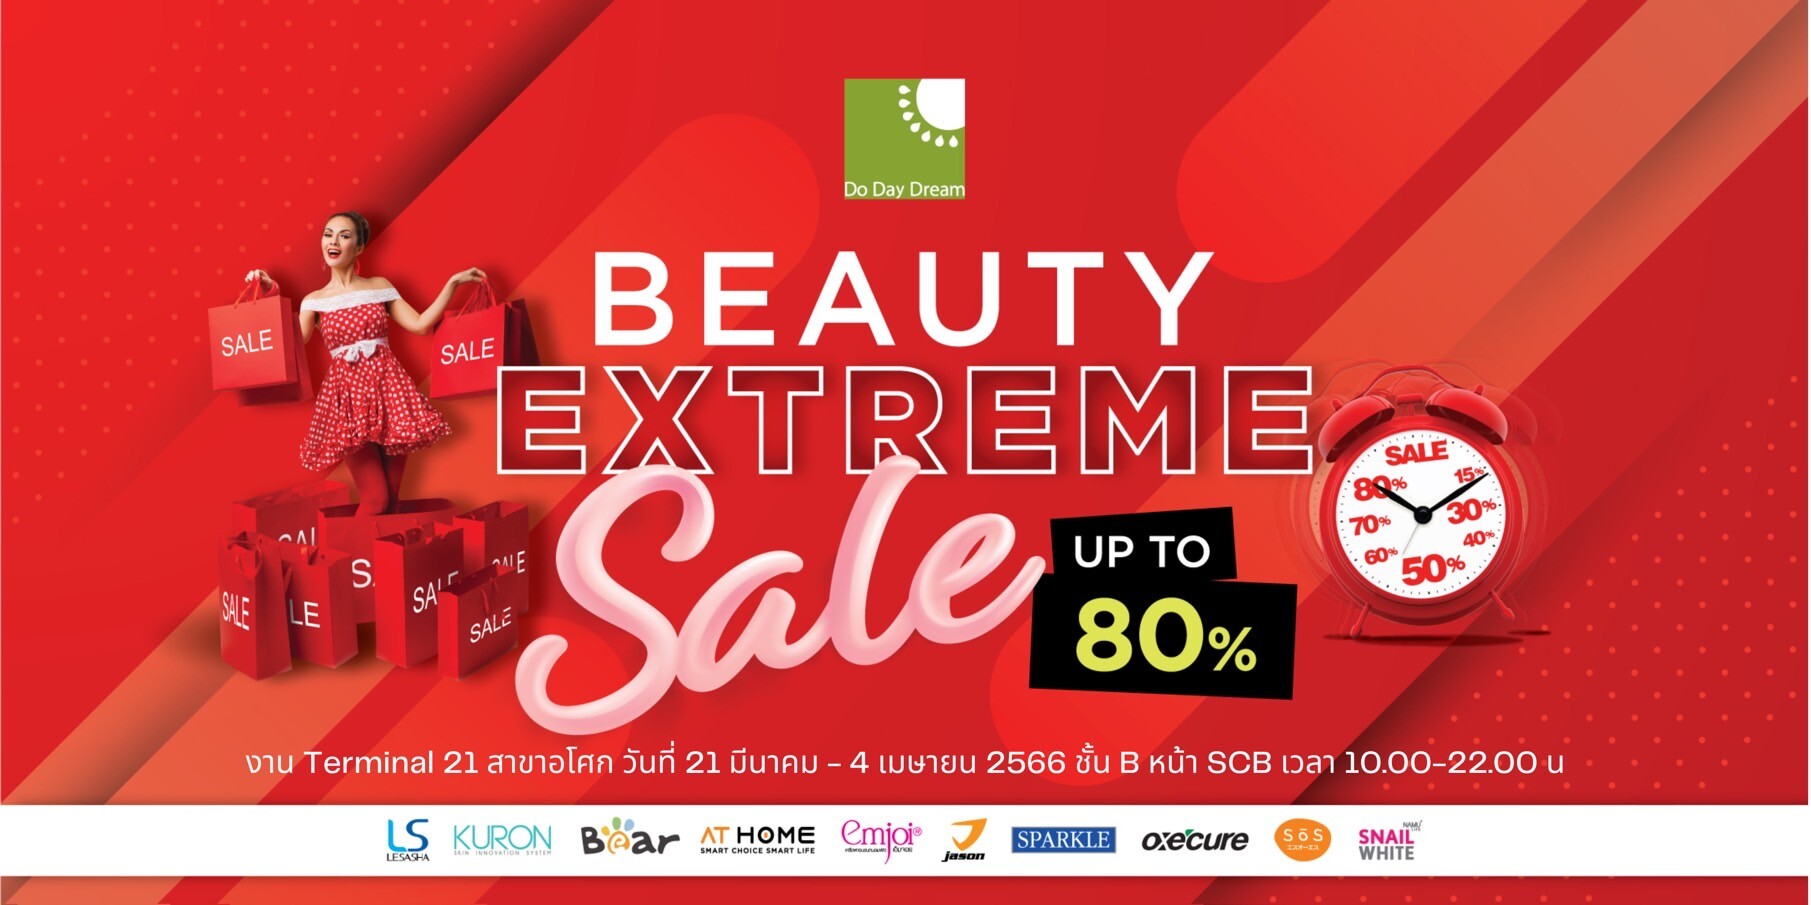 DDD เอาใจนักช้อป! จัดโปรเด็ด ลดสูงสุด 80% ในงาน "Beauty Extreme Sale"